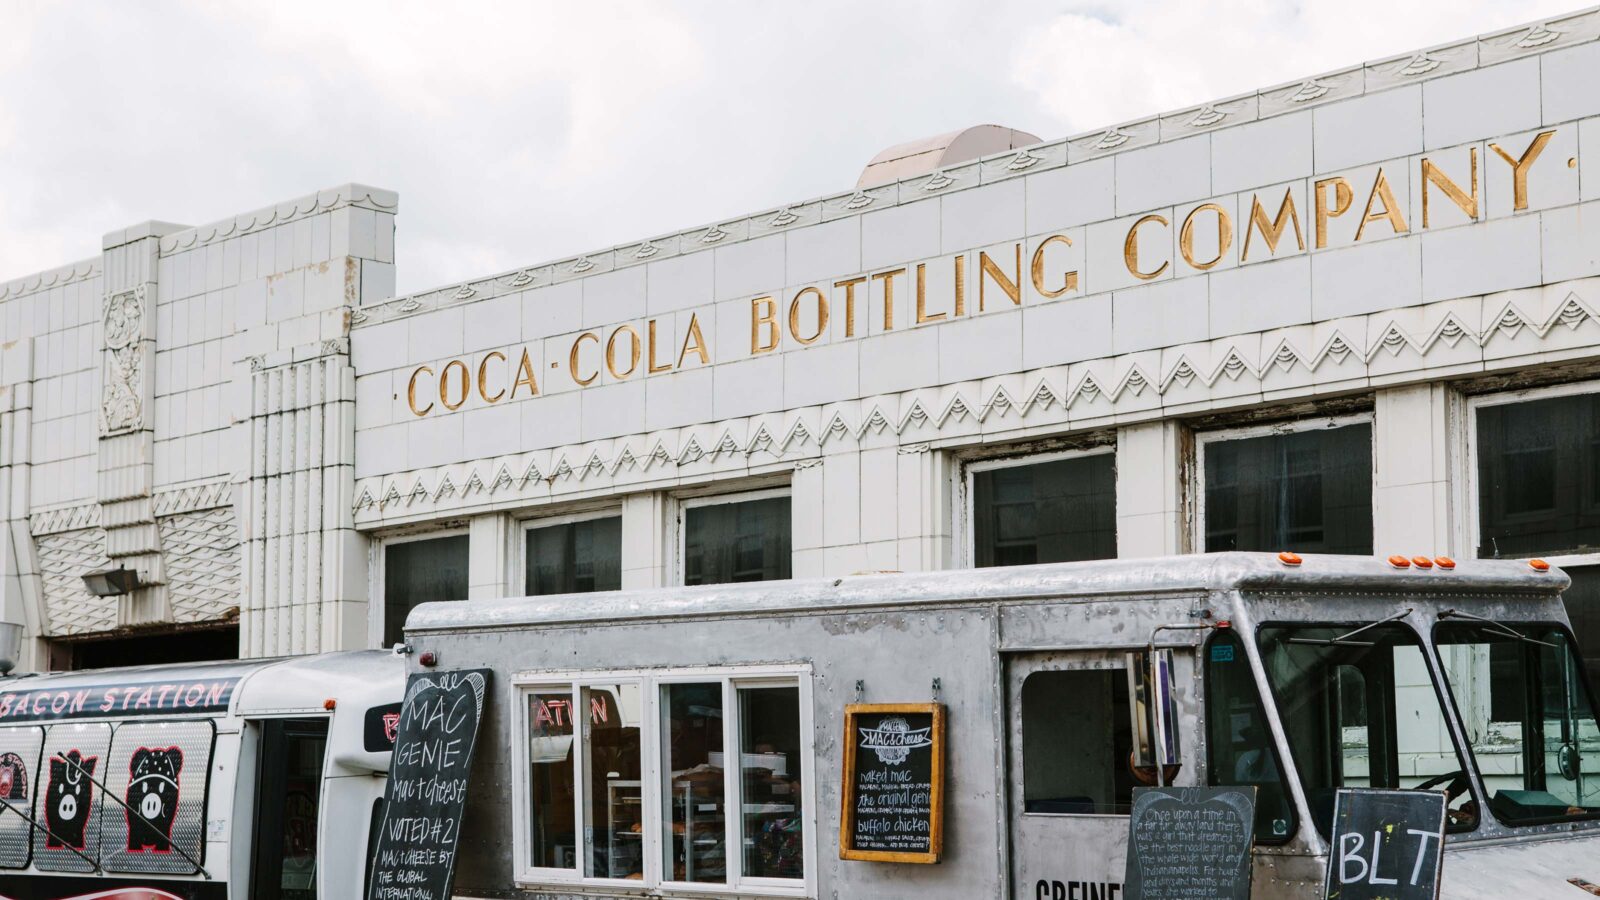 historic tour at old coca cola bottling plant